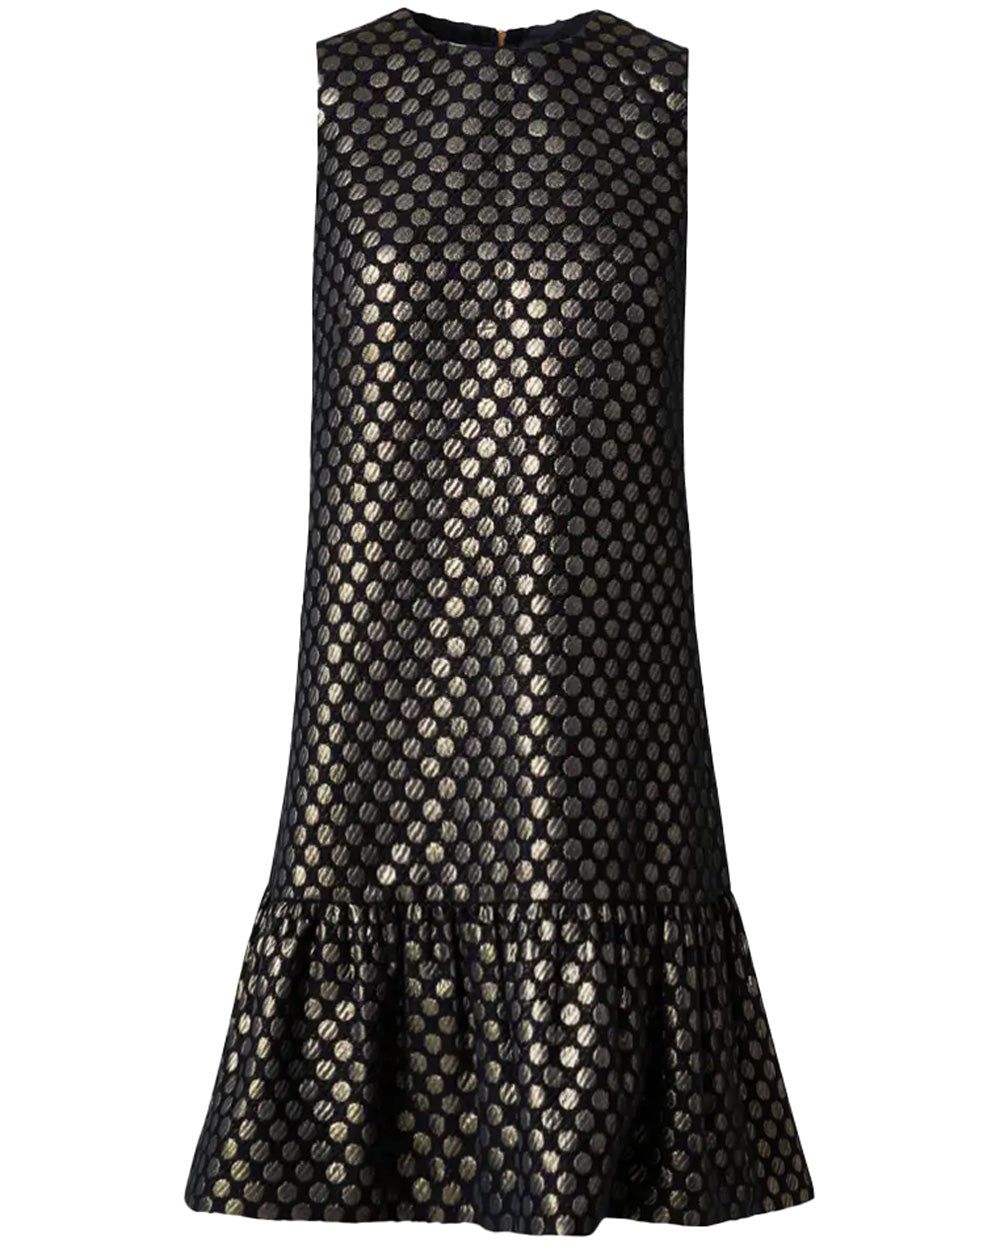 Black Mixed Metallic Polka Dot Jacquard Mini Dress